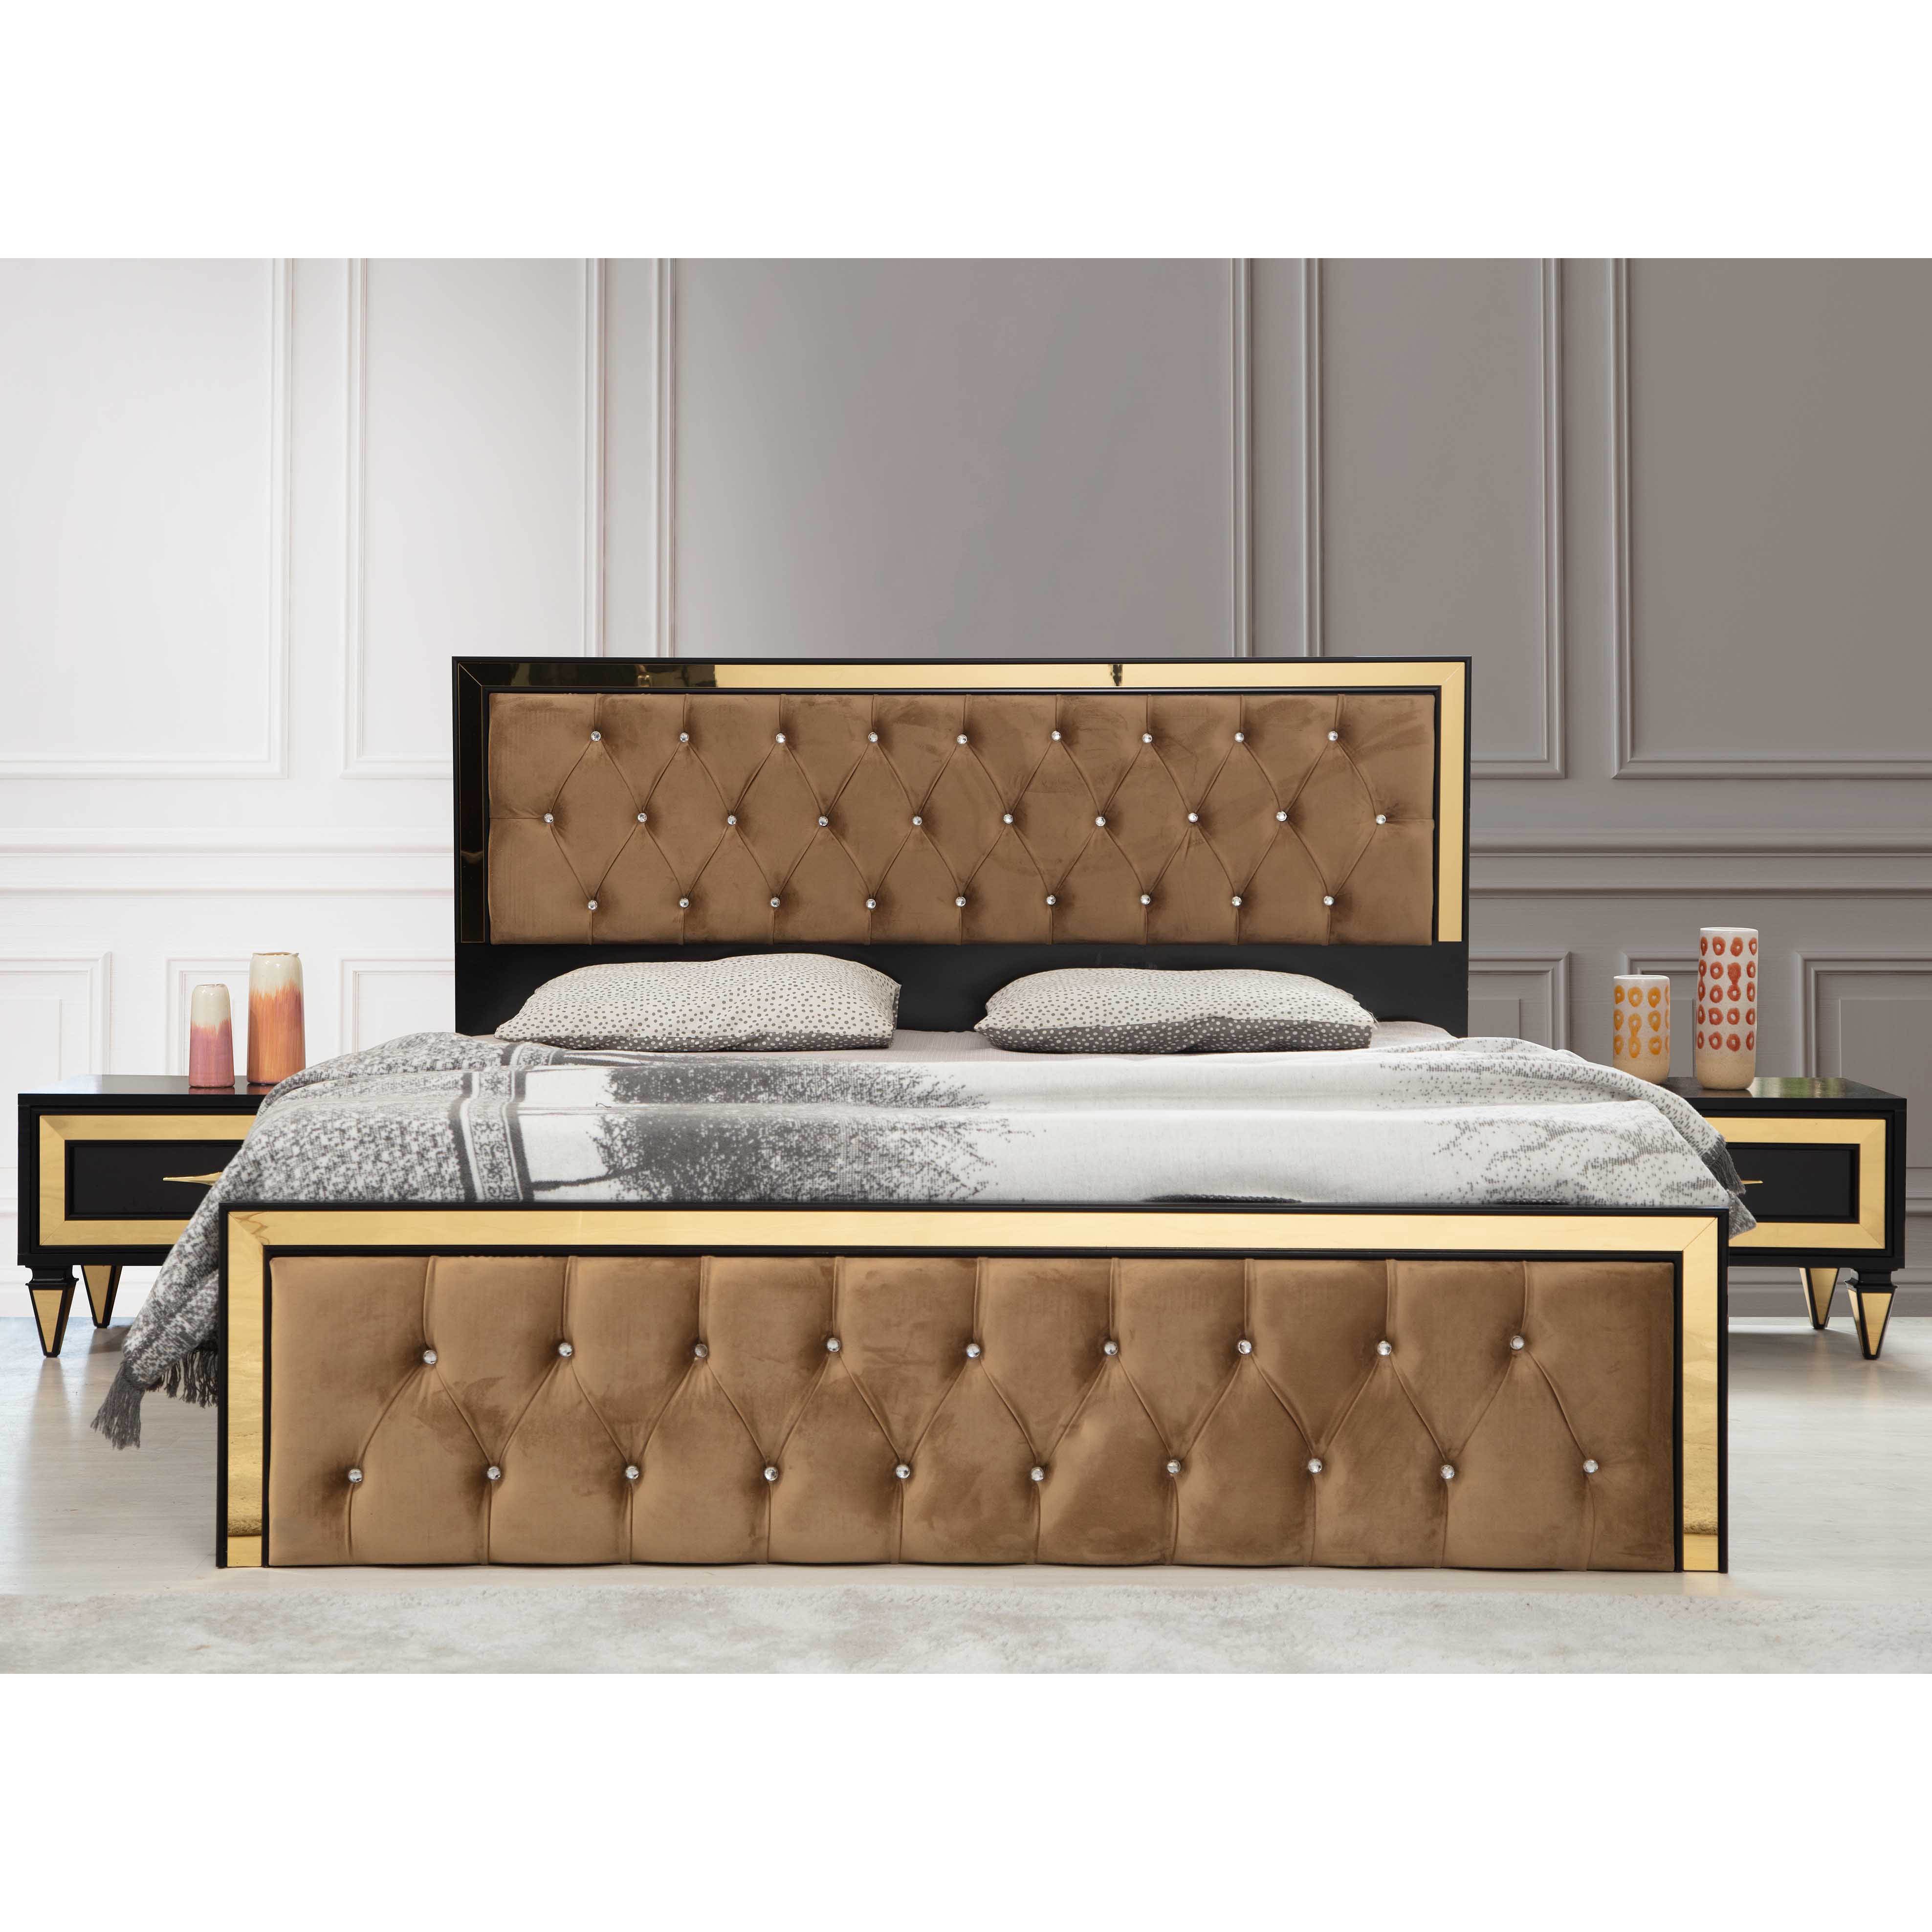 Prenses Vol2 Bed With Storage 180x200 cm